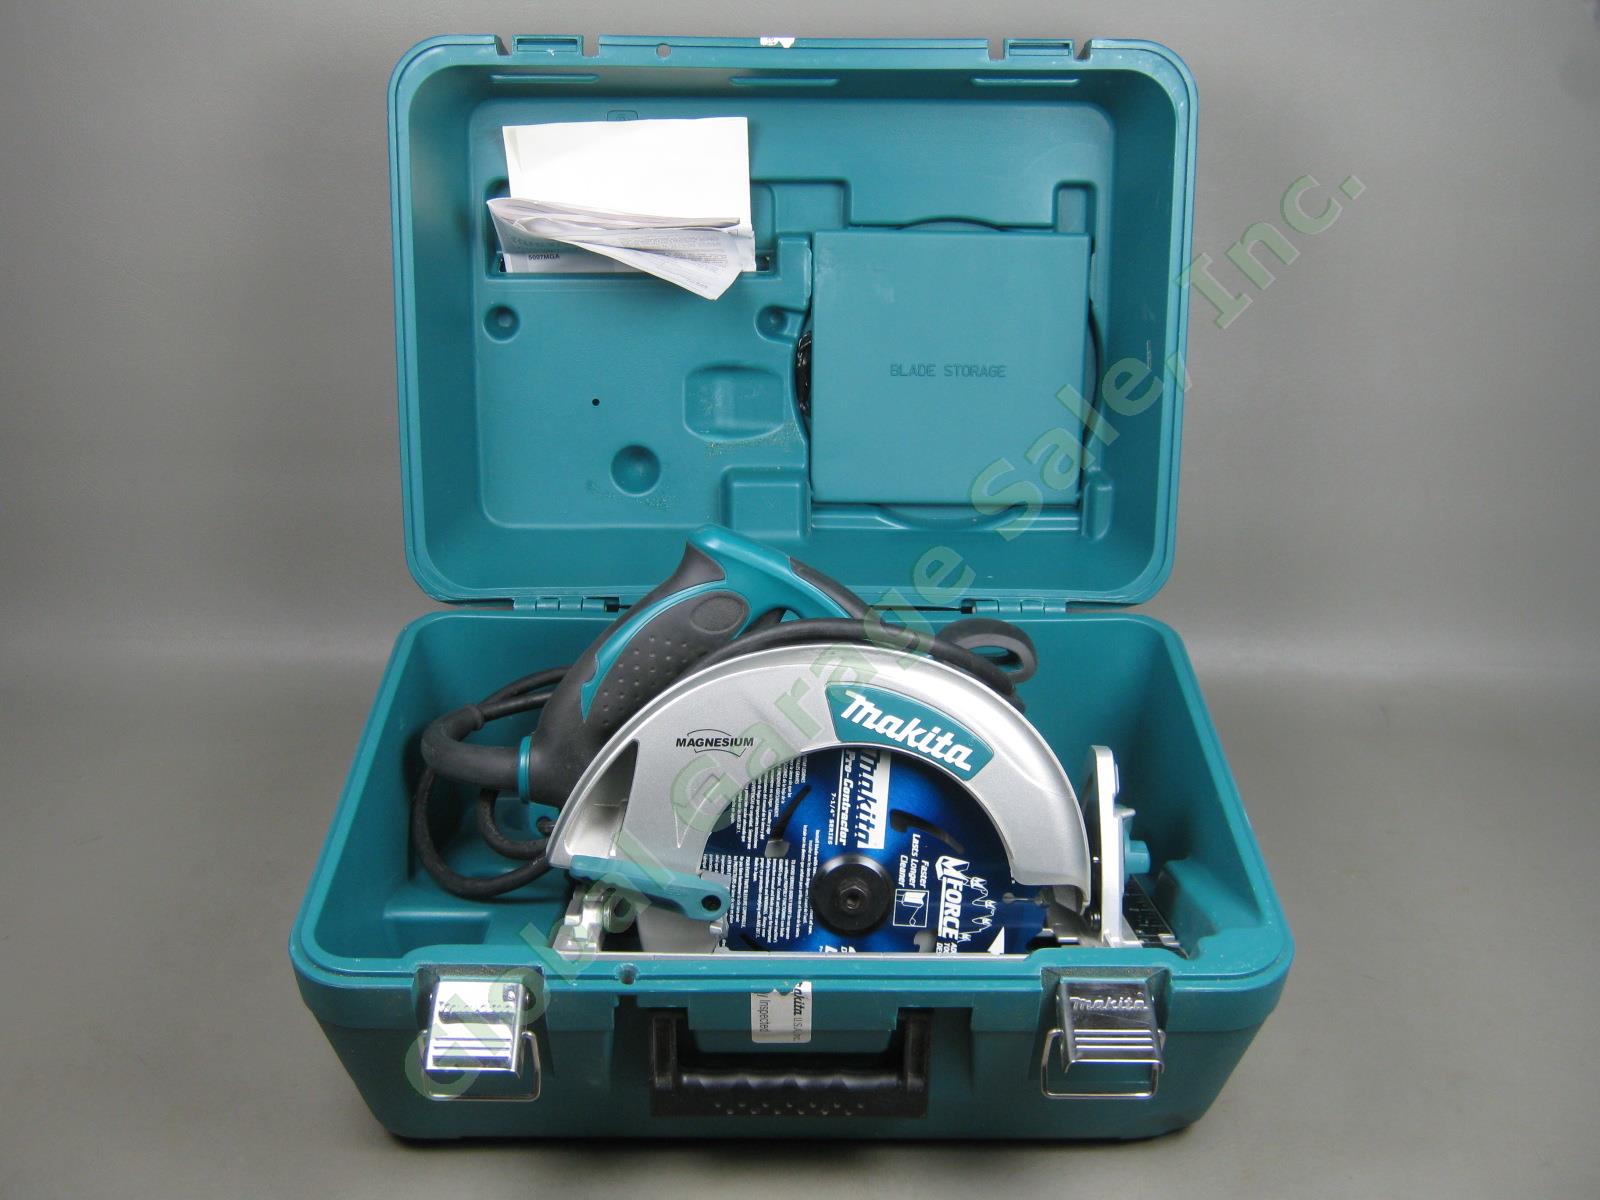 Makita 5007MG 7-1/4" 120V 15 Amp Magnesium Corded Electric Circular Saw W/ Case+